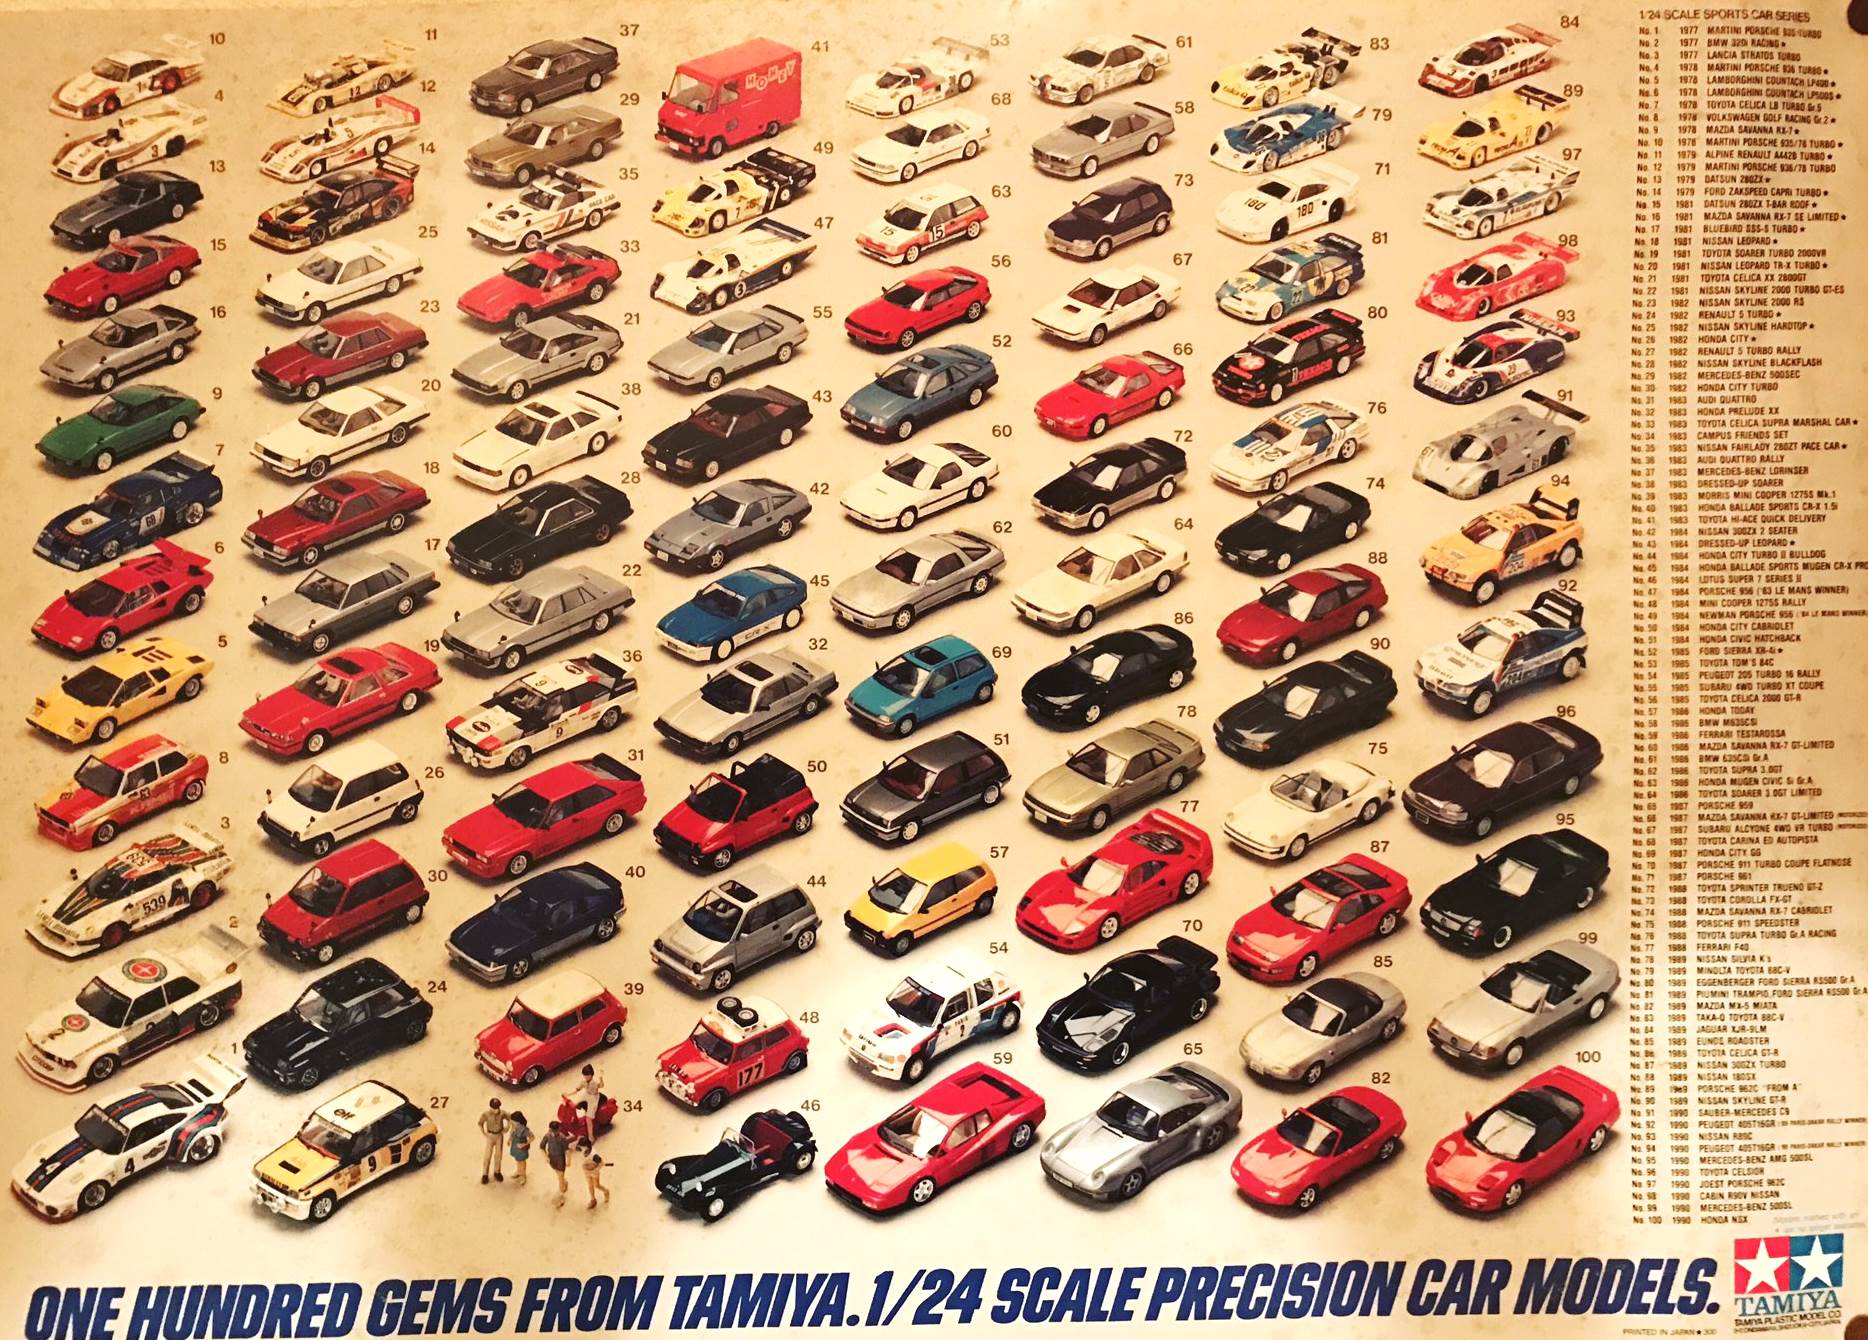 Tamiya 1/24 Scale Sports Car Series first hundert models poster - TamiyaBlog